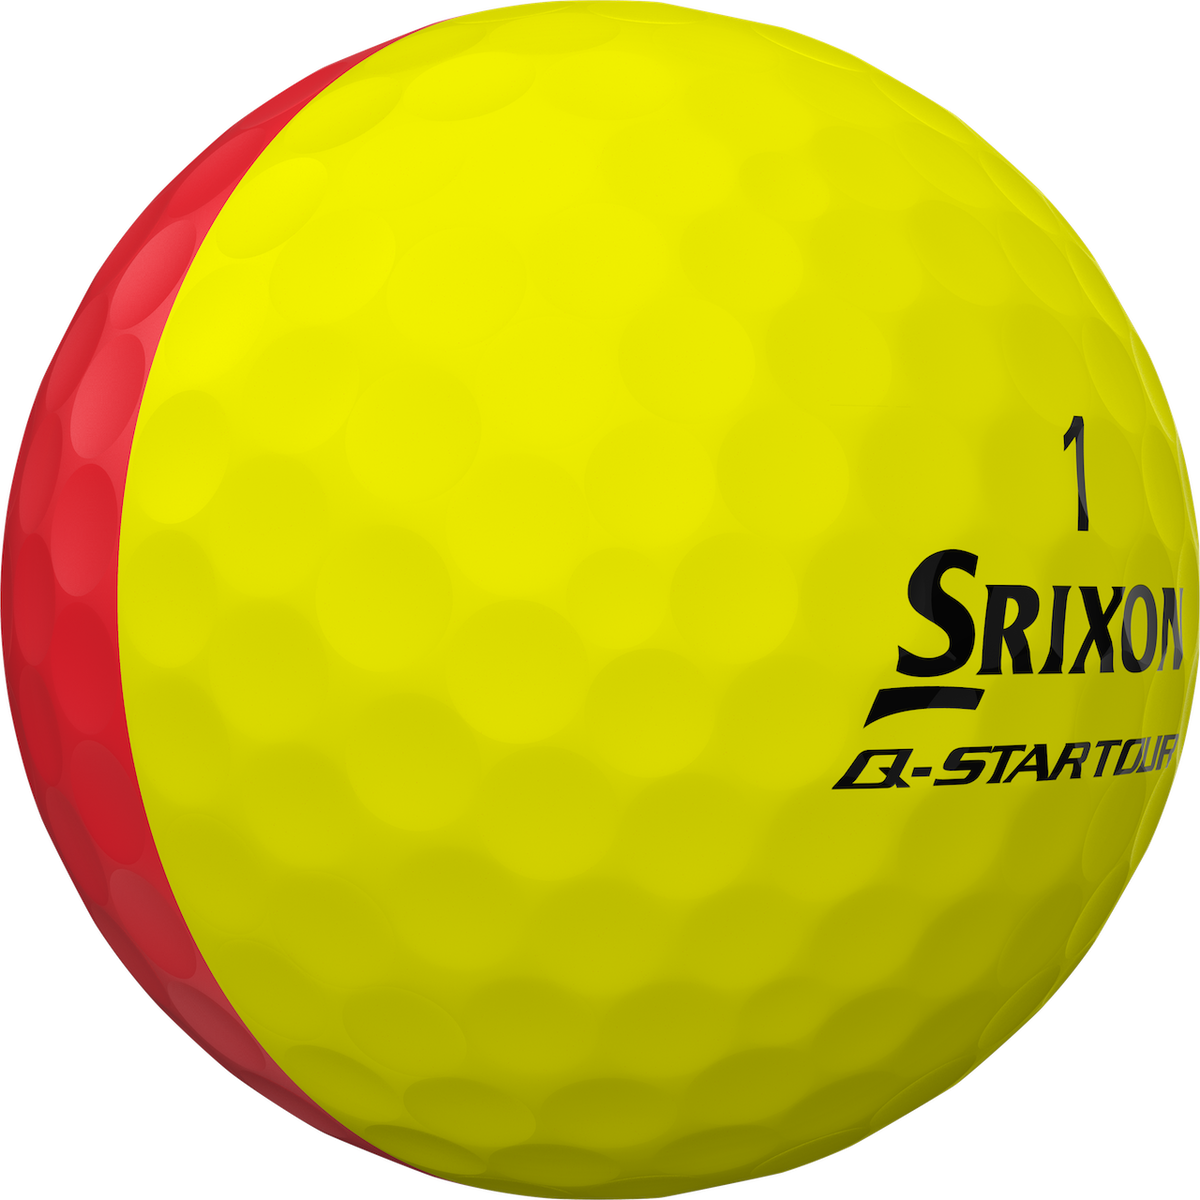 Srixon Q Star Tour Divide golf ball